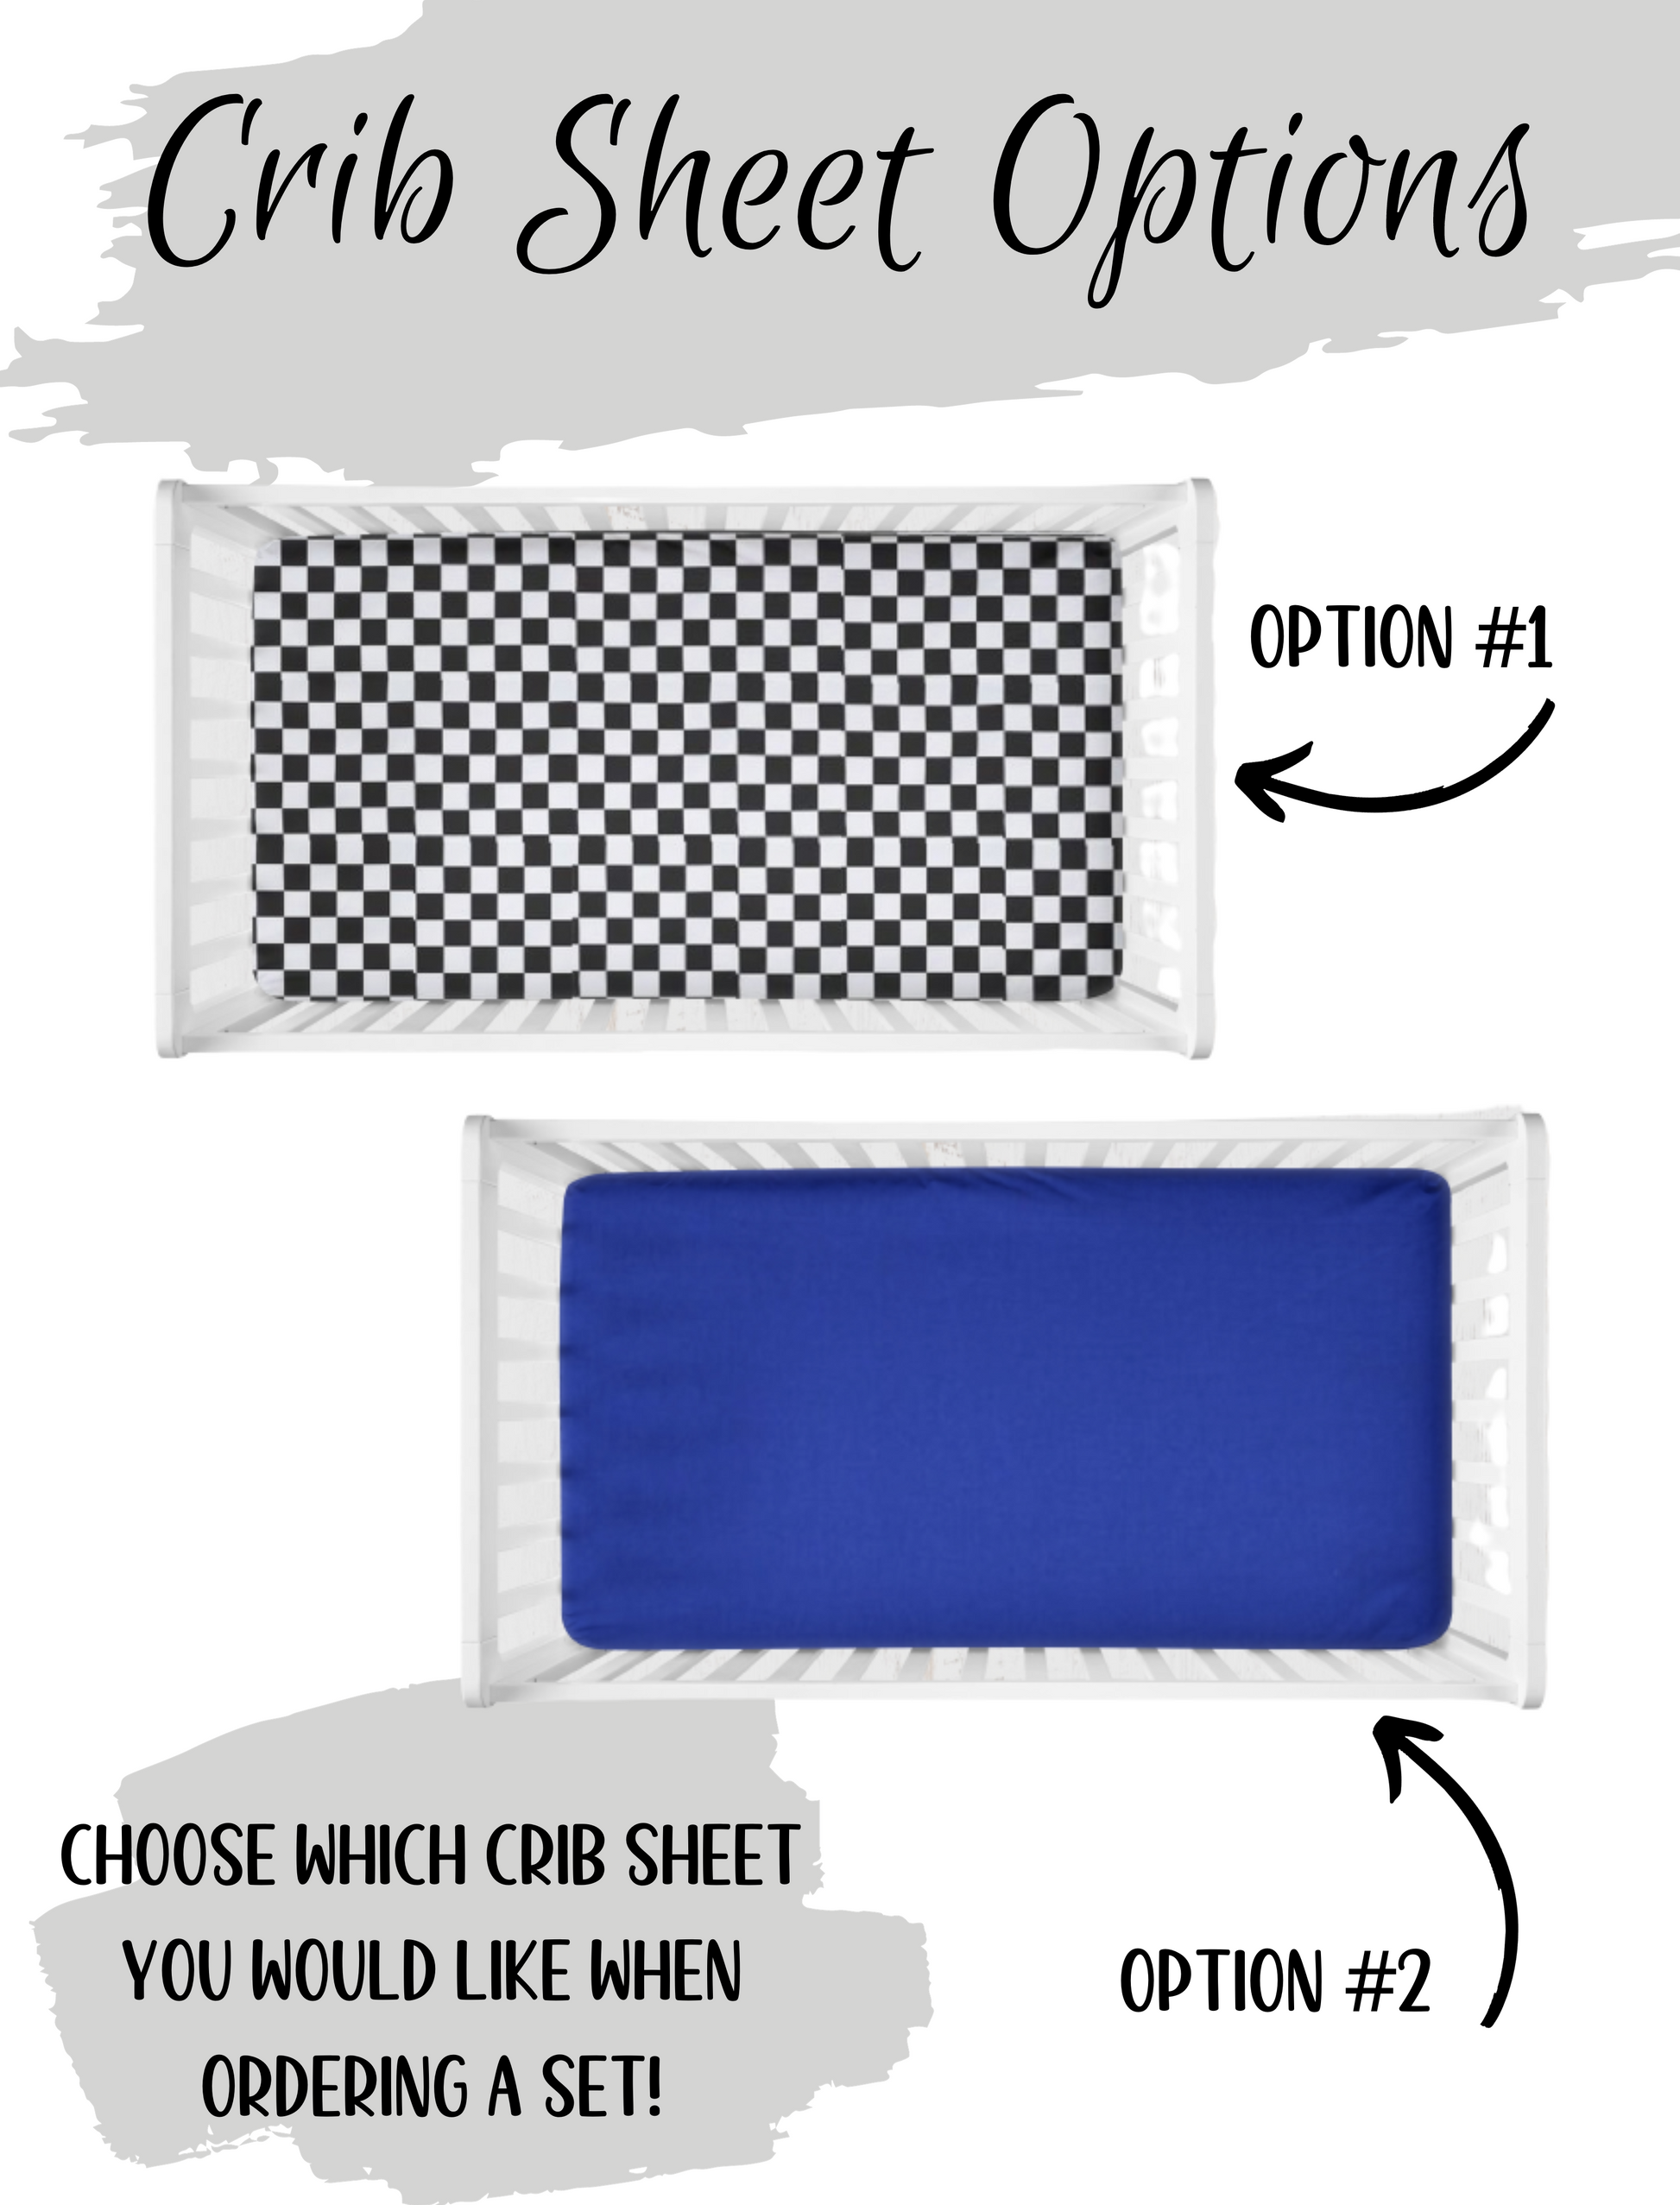 you pick crib sheet - racing check or blue 